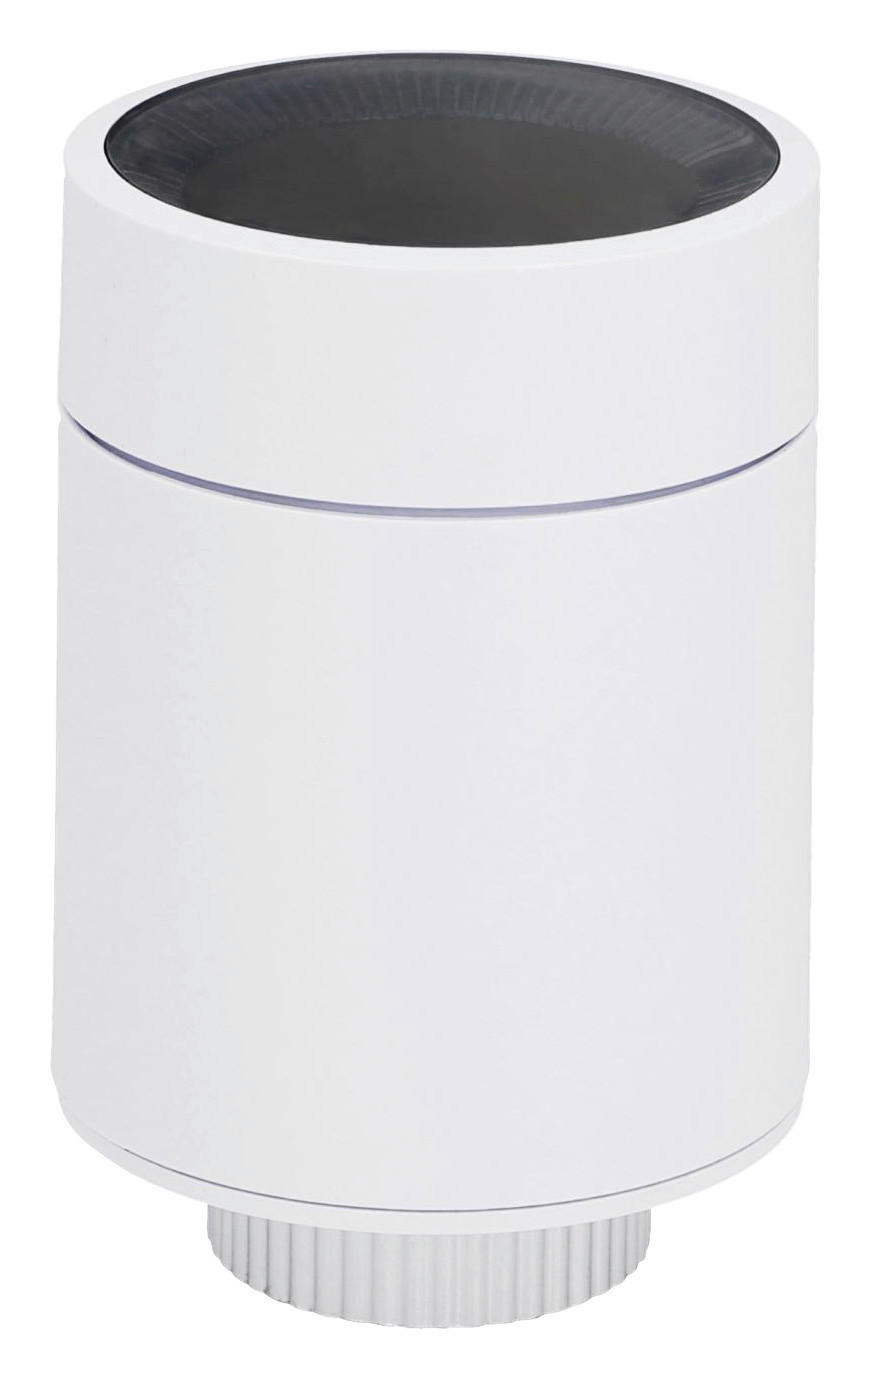 UniTec Thermostat Heizkörper-Thermostat_Zigbee - Unitec